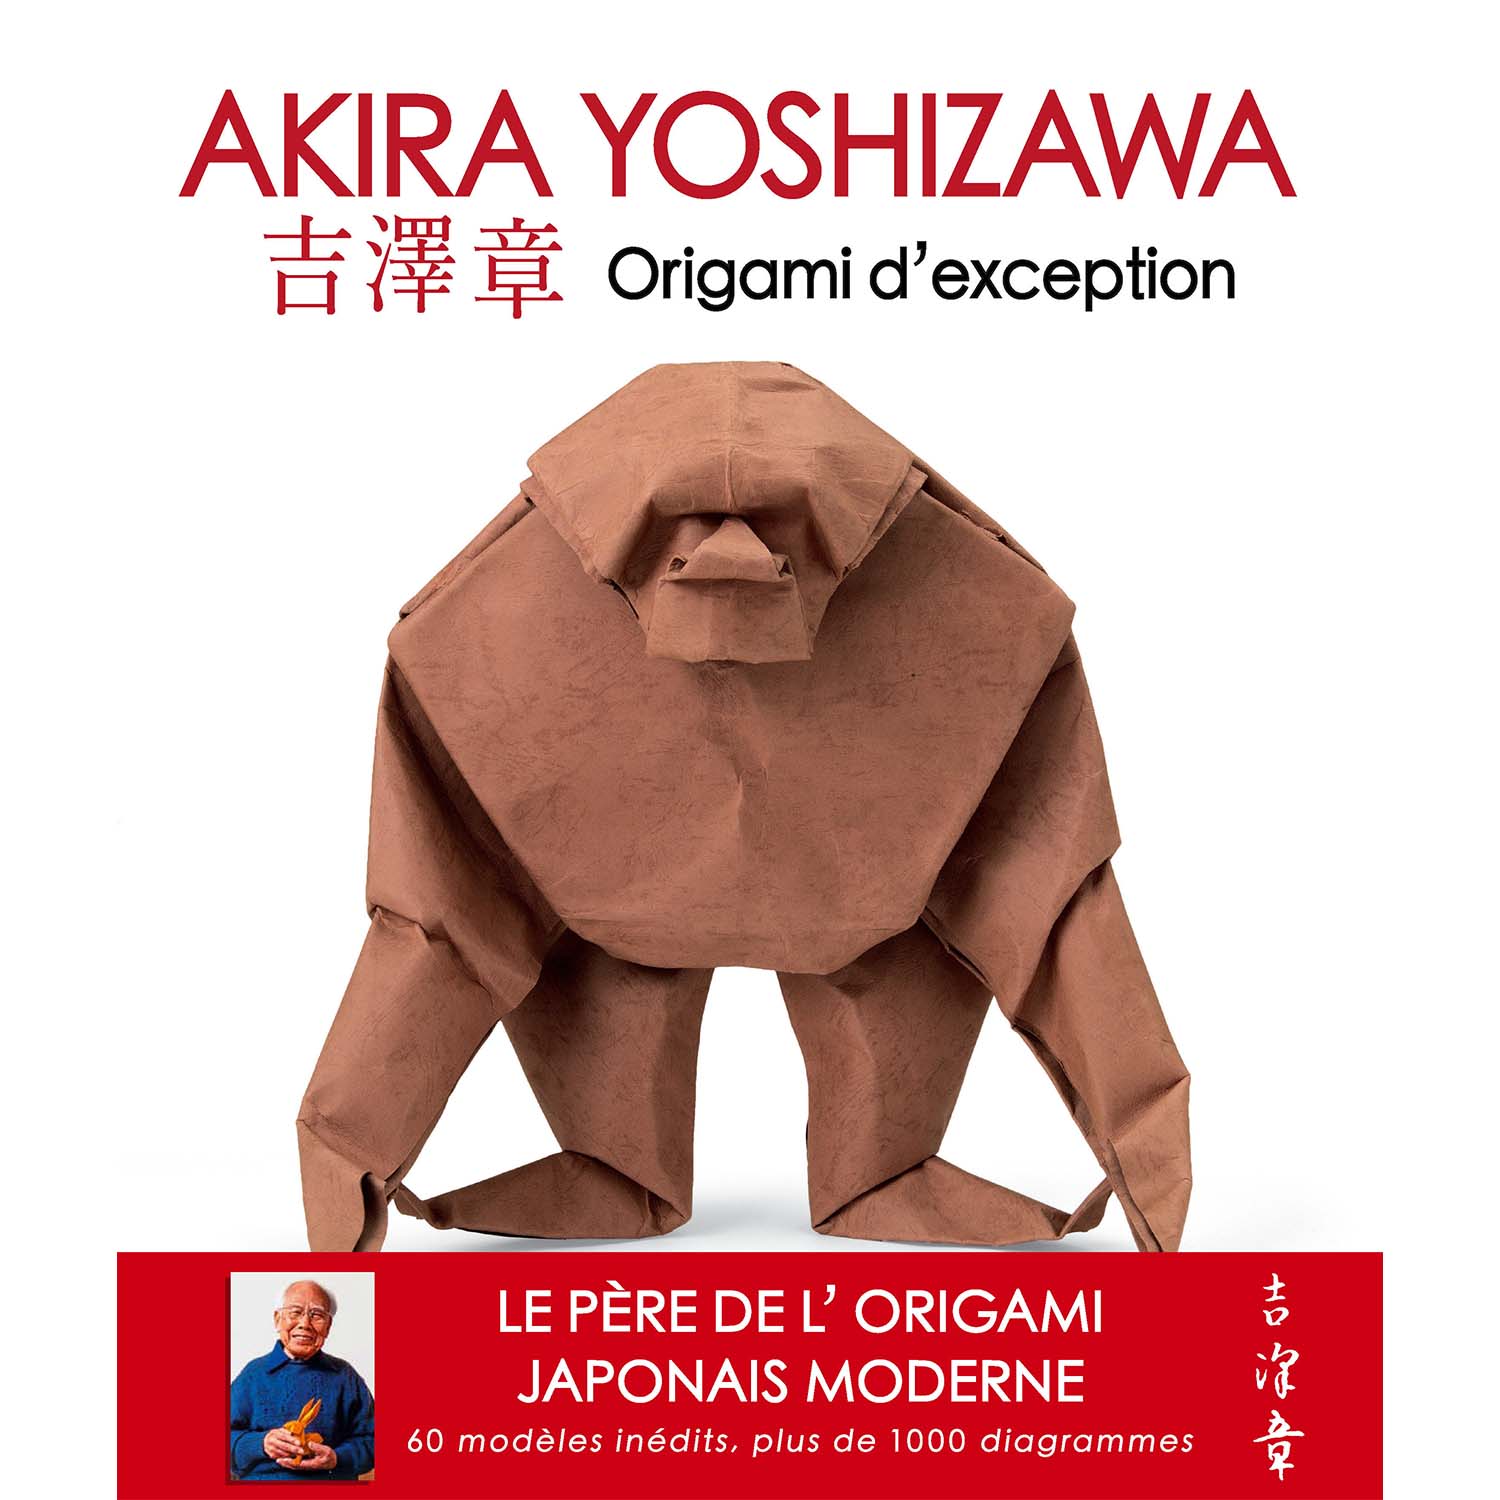 Akira Yoshizawa - Origami d'exception (nouvelle édition)